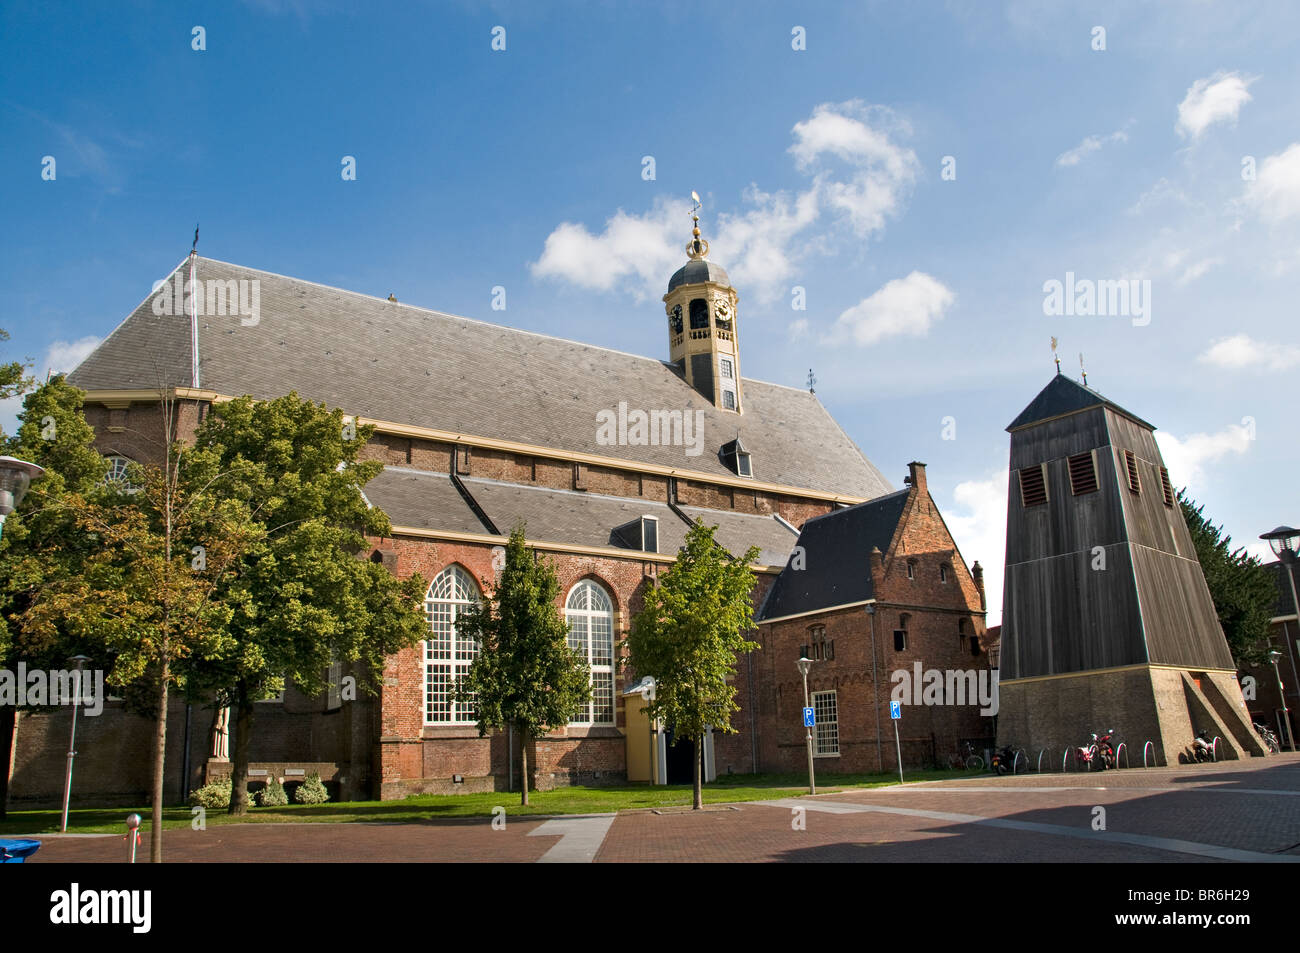 Martinikerk Klokhuis Sneek  Netherlands Friesland town city church Stock Photo